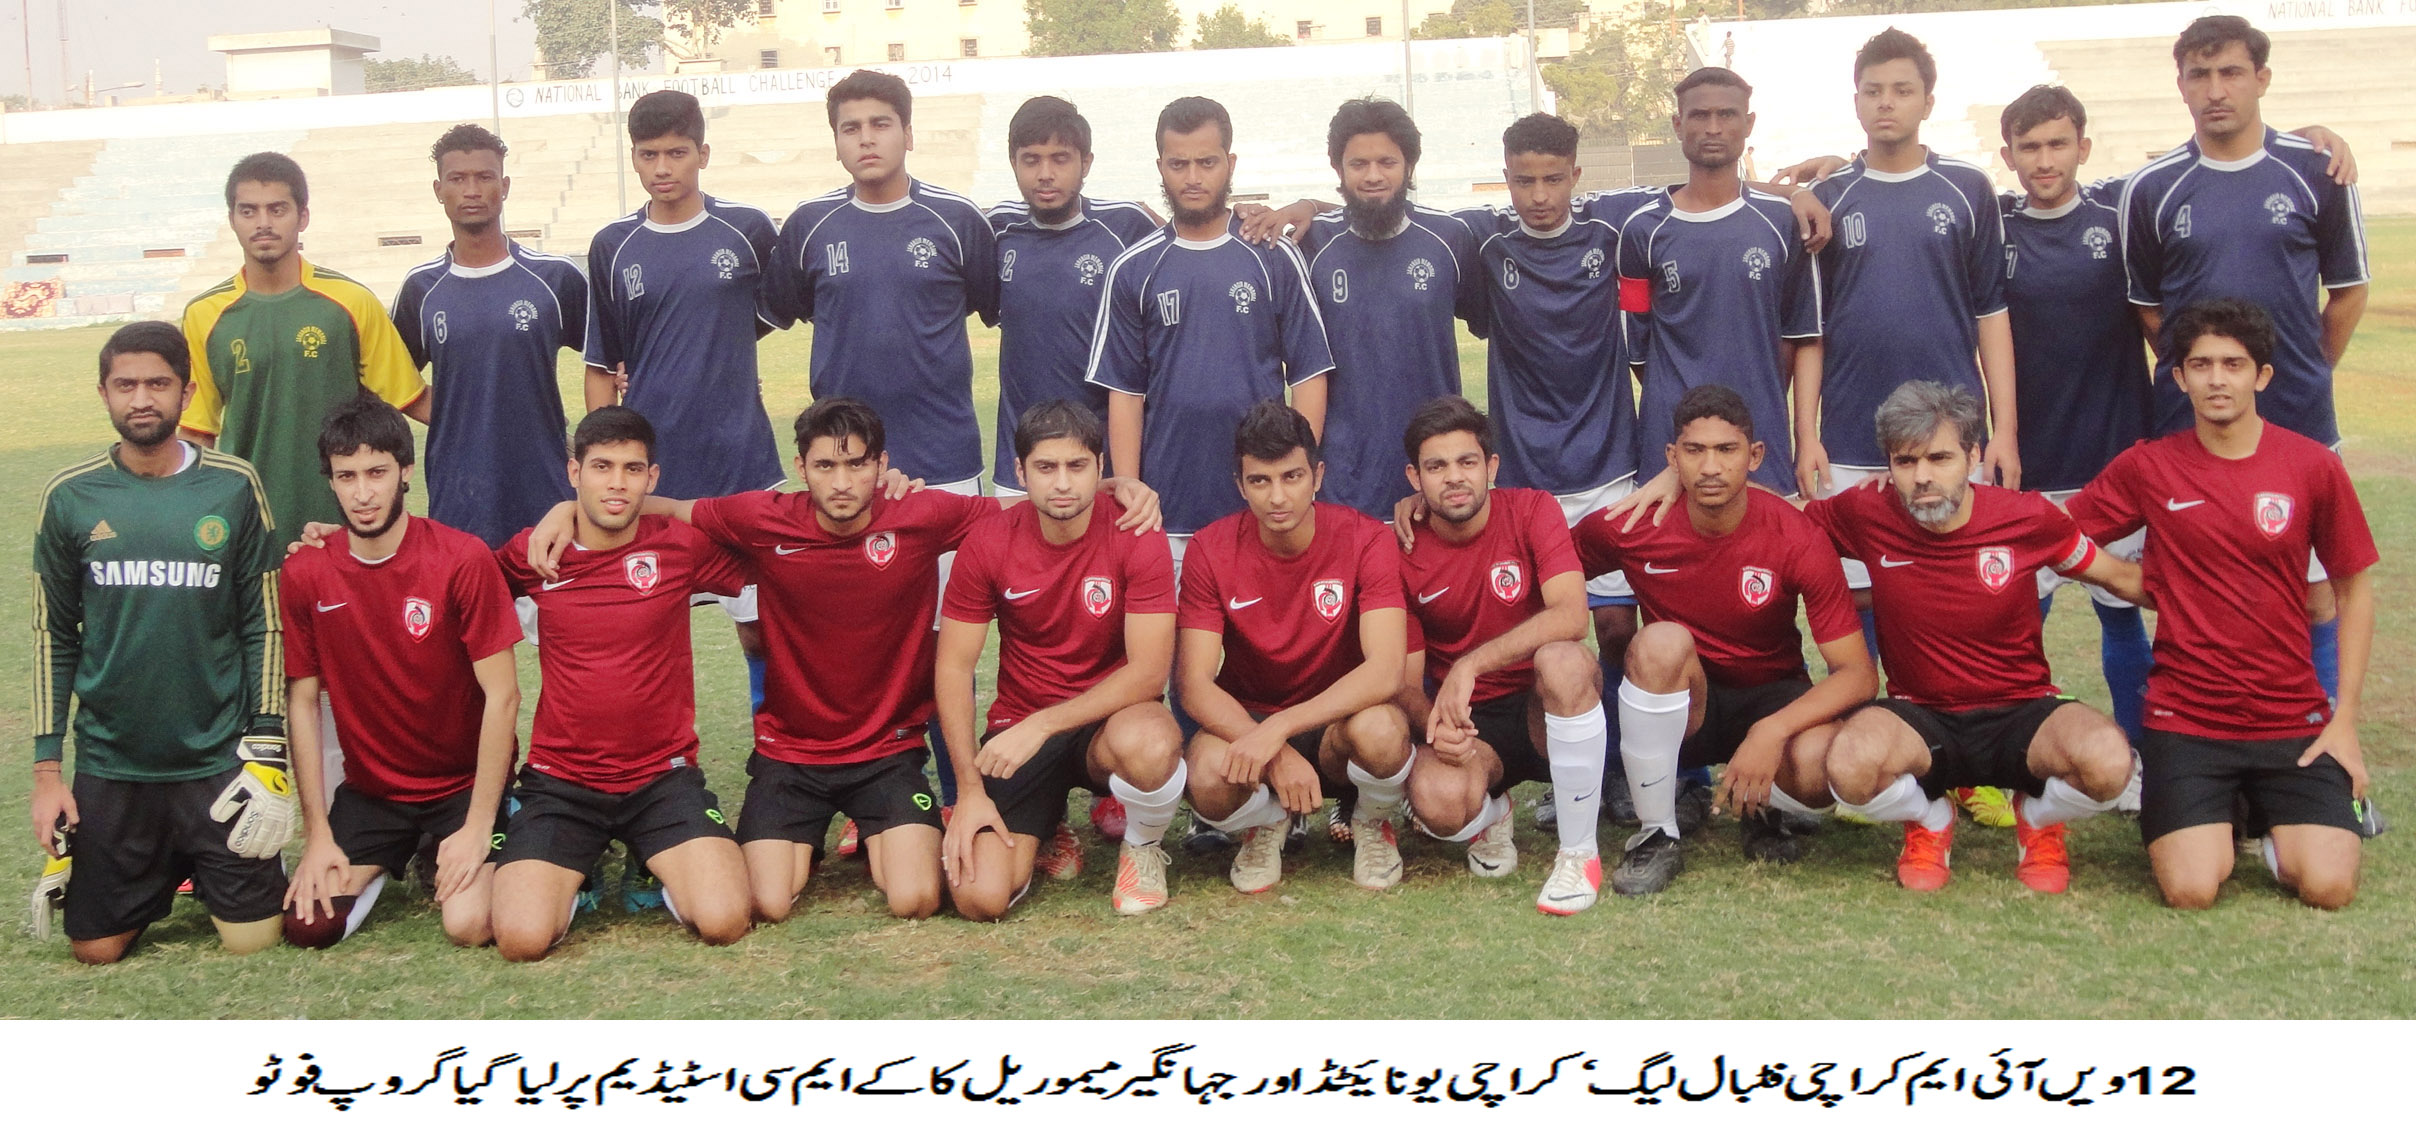 Karachi Football League: KUFC, Musim Brothers secure victories